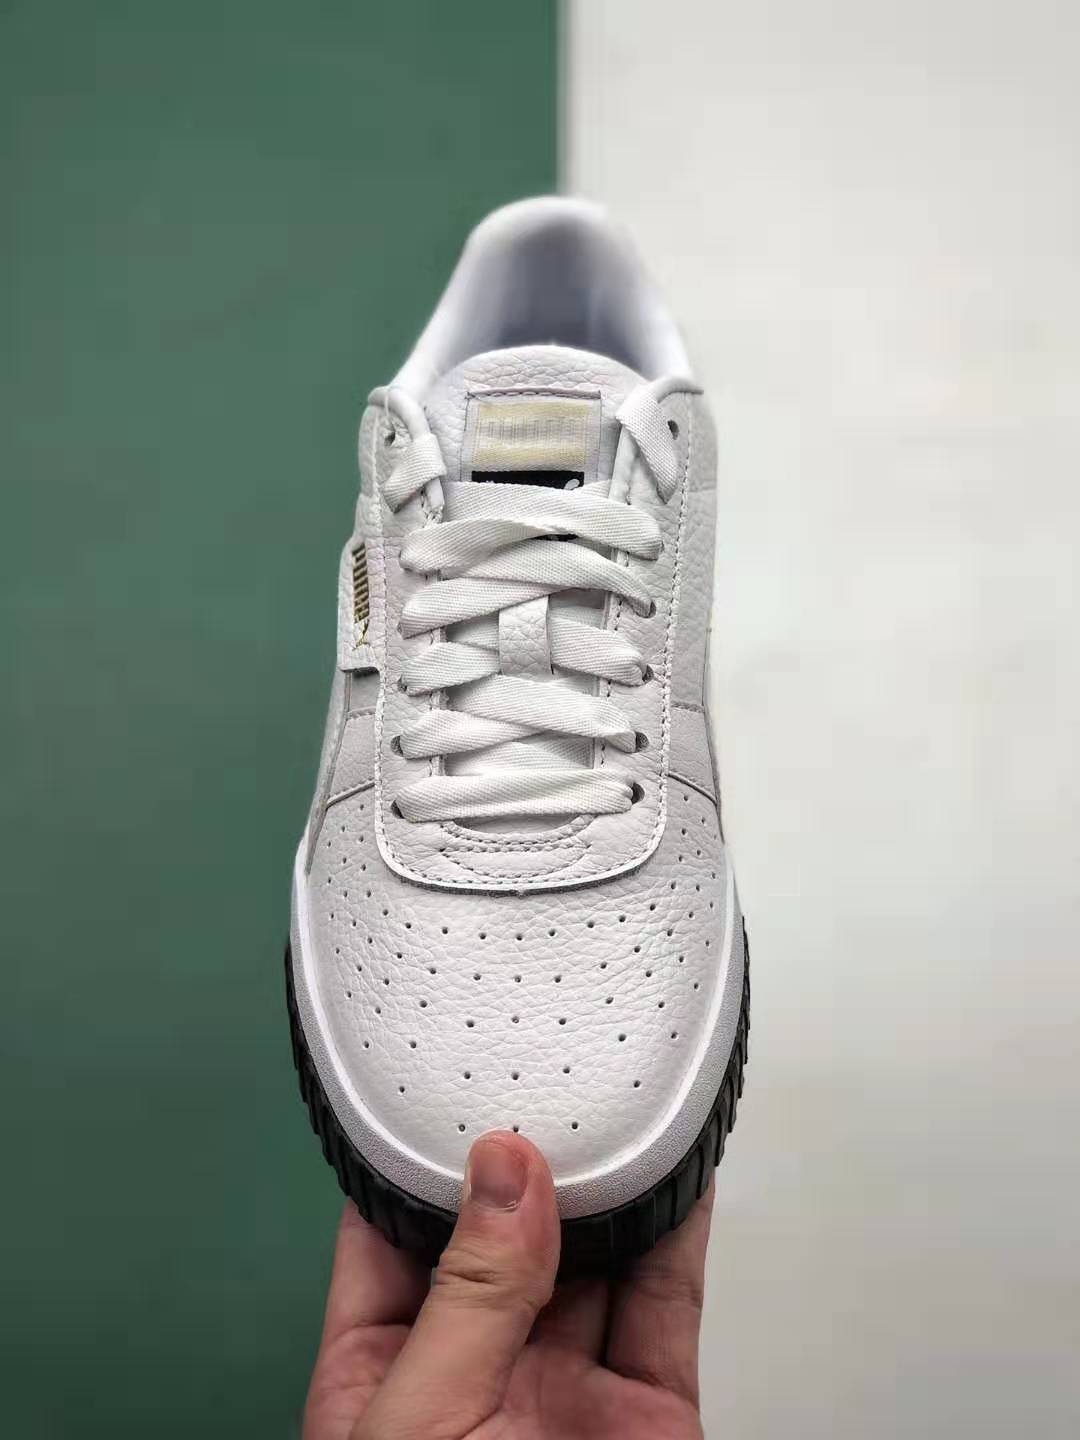 PUMA Cali 'White' 369155-04 - Stylish and Classic Women's Sneakers